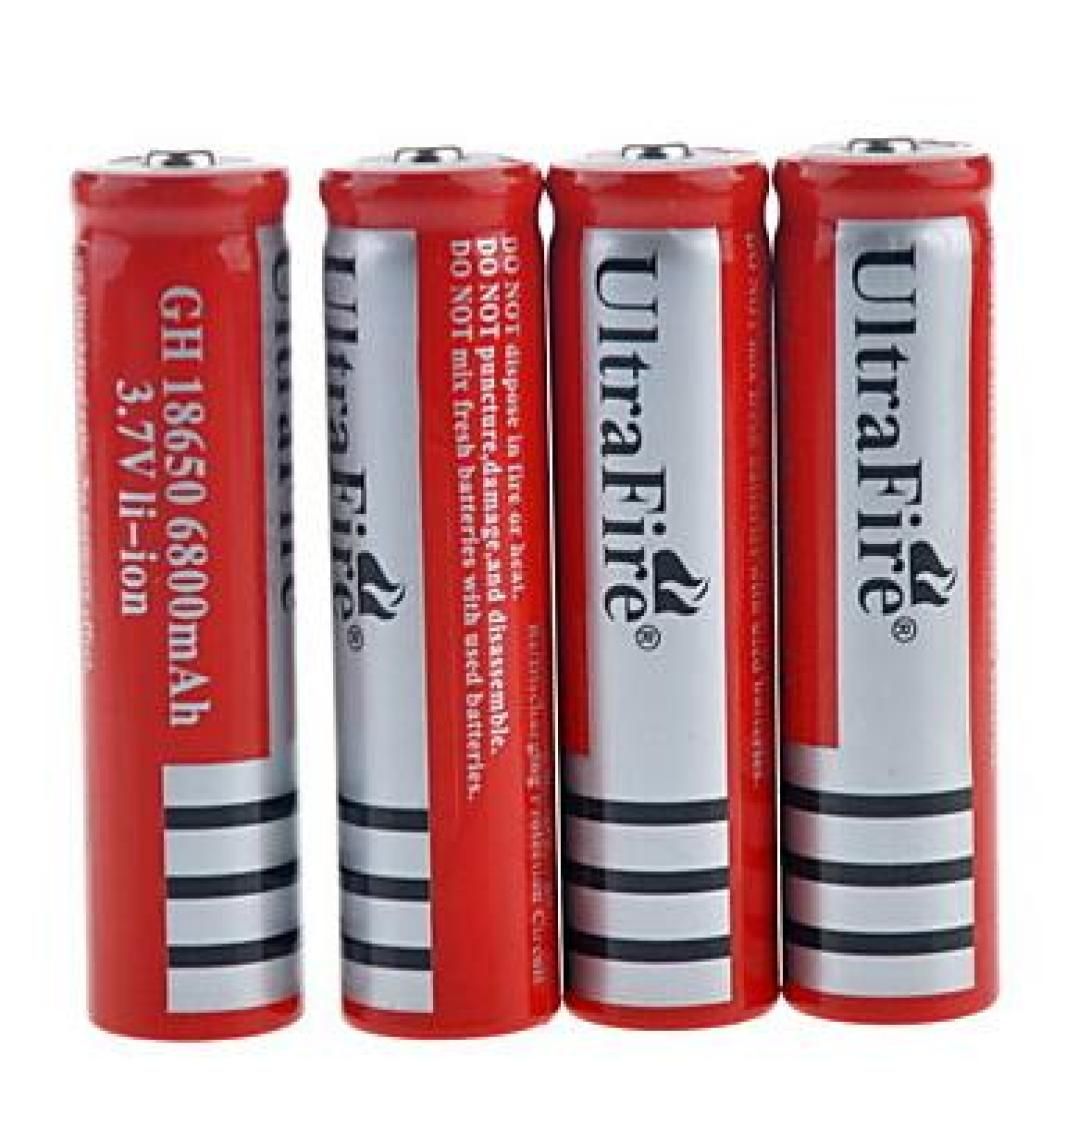 Batterie rechargeable 18650 3.7 V 6800mAh li-ion